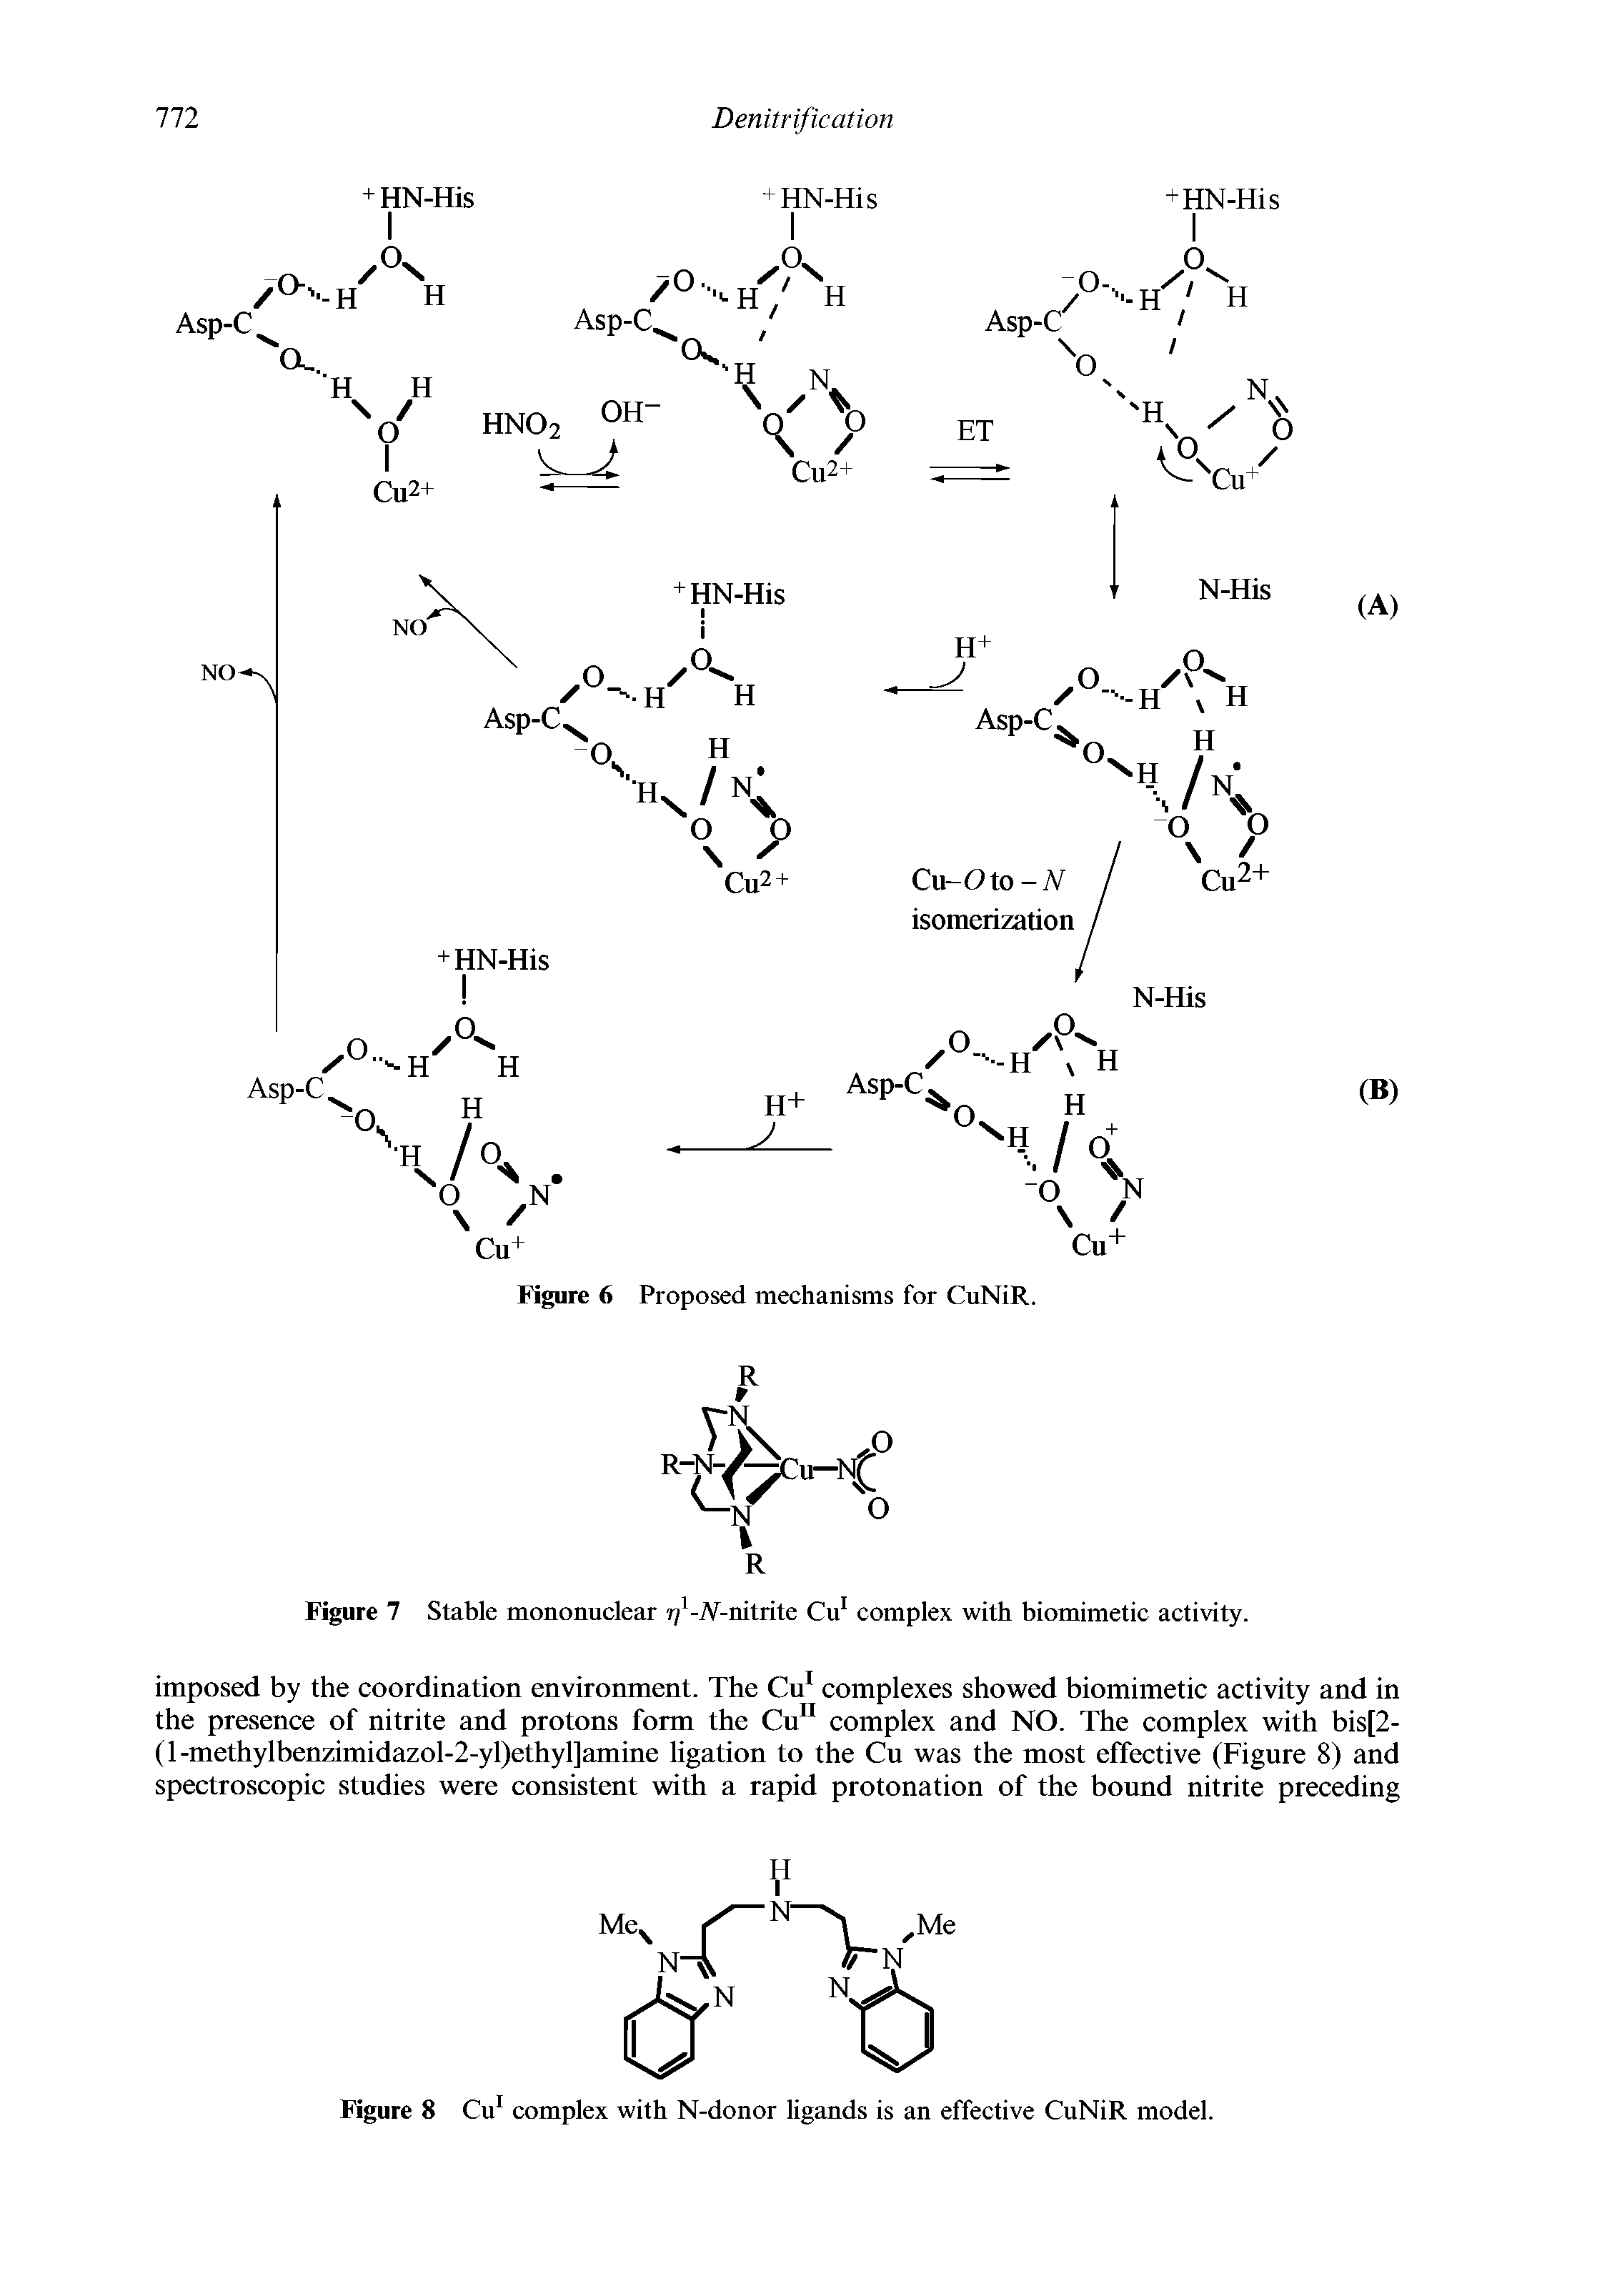 Figure 7 Stable mononuclear 7j -A-nitrite Cu complex with biomimetic activity.